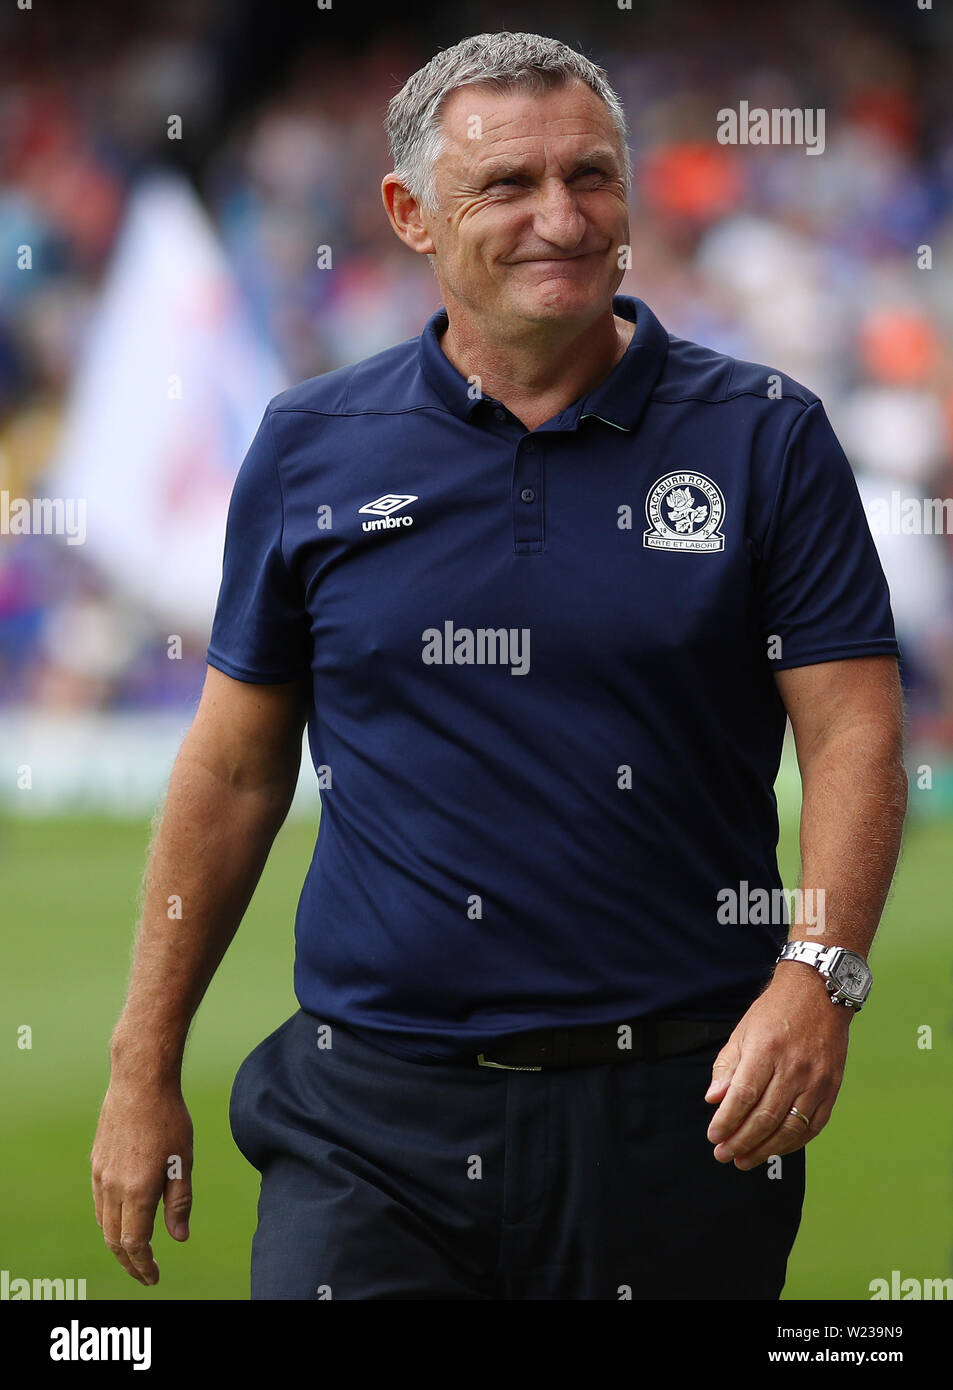 Manager of Blackburn Rovers, Tony Mowbray - Ipswich Town v Blackburn Rovers, Sky Bet Championship, Portman Road, Ipswich - 4th August 2018 Stock Photo